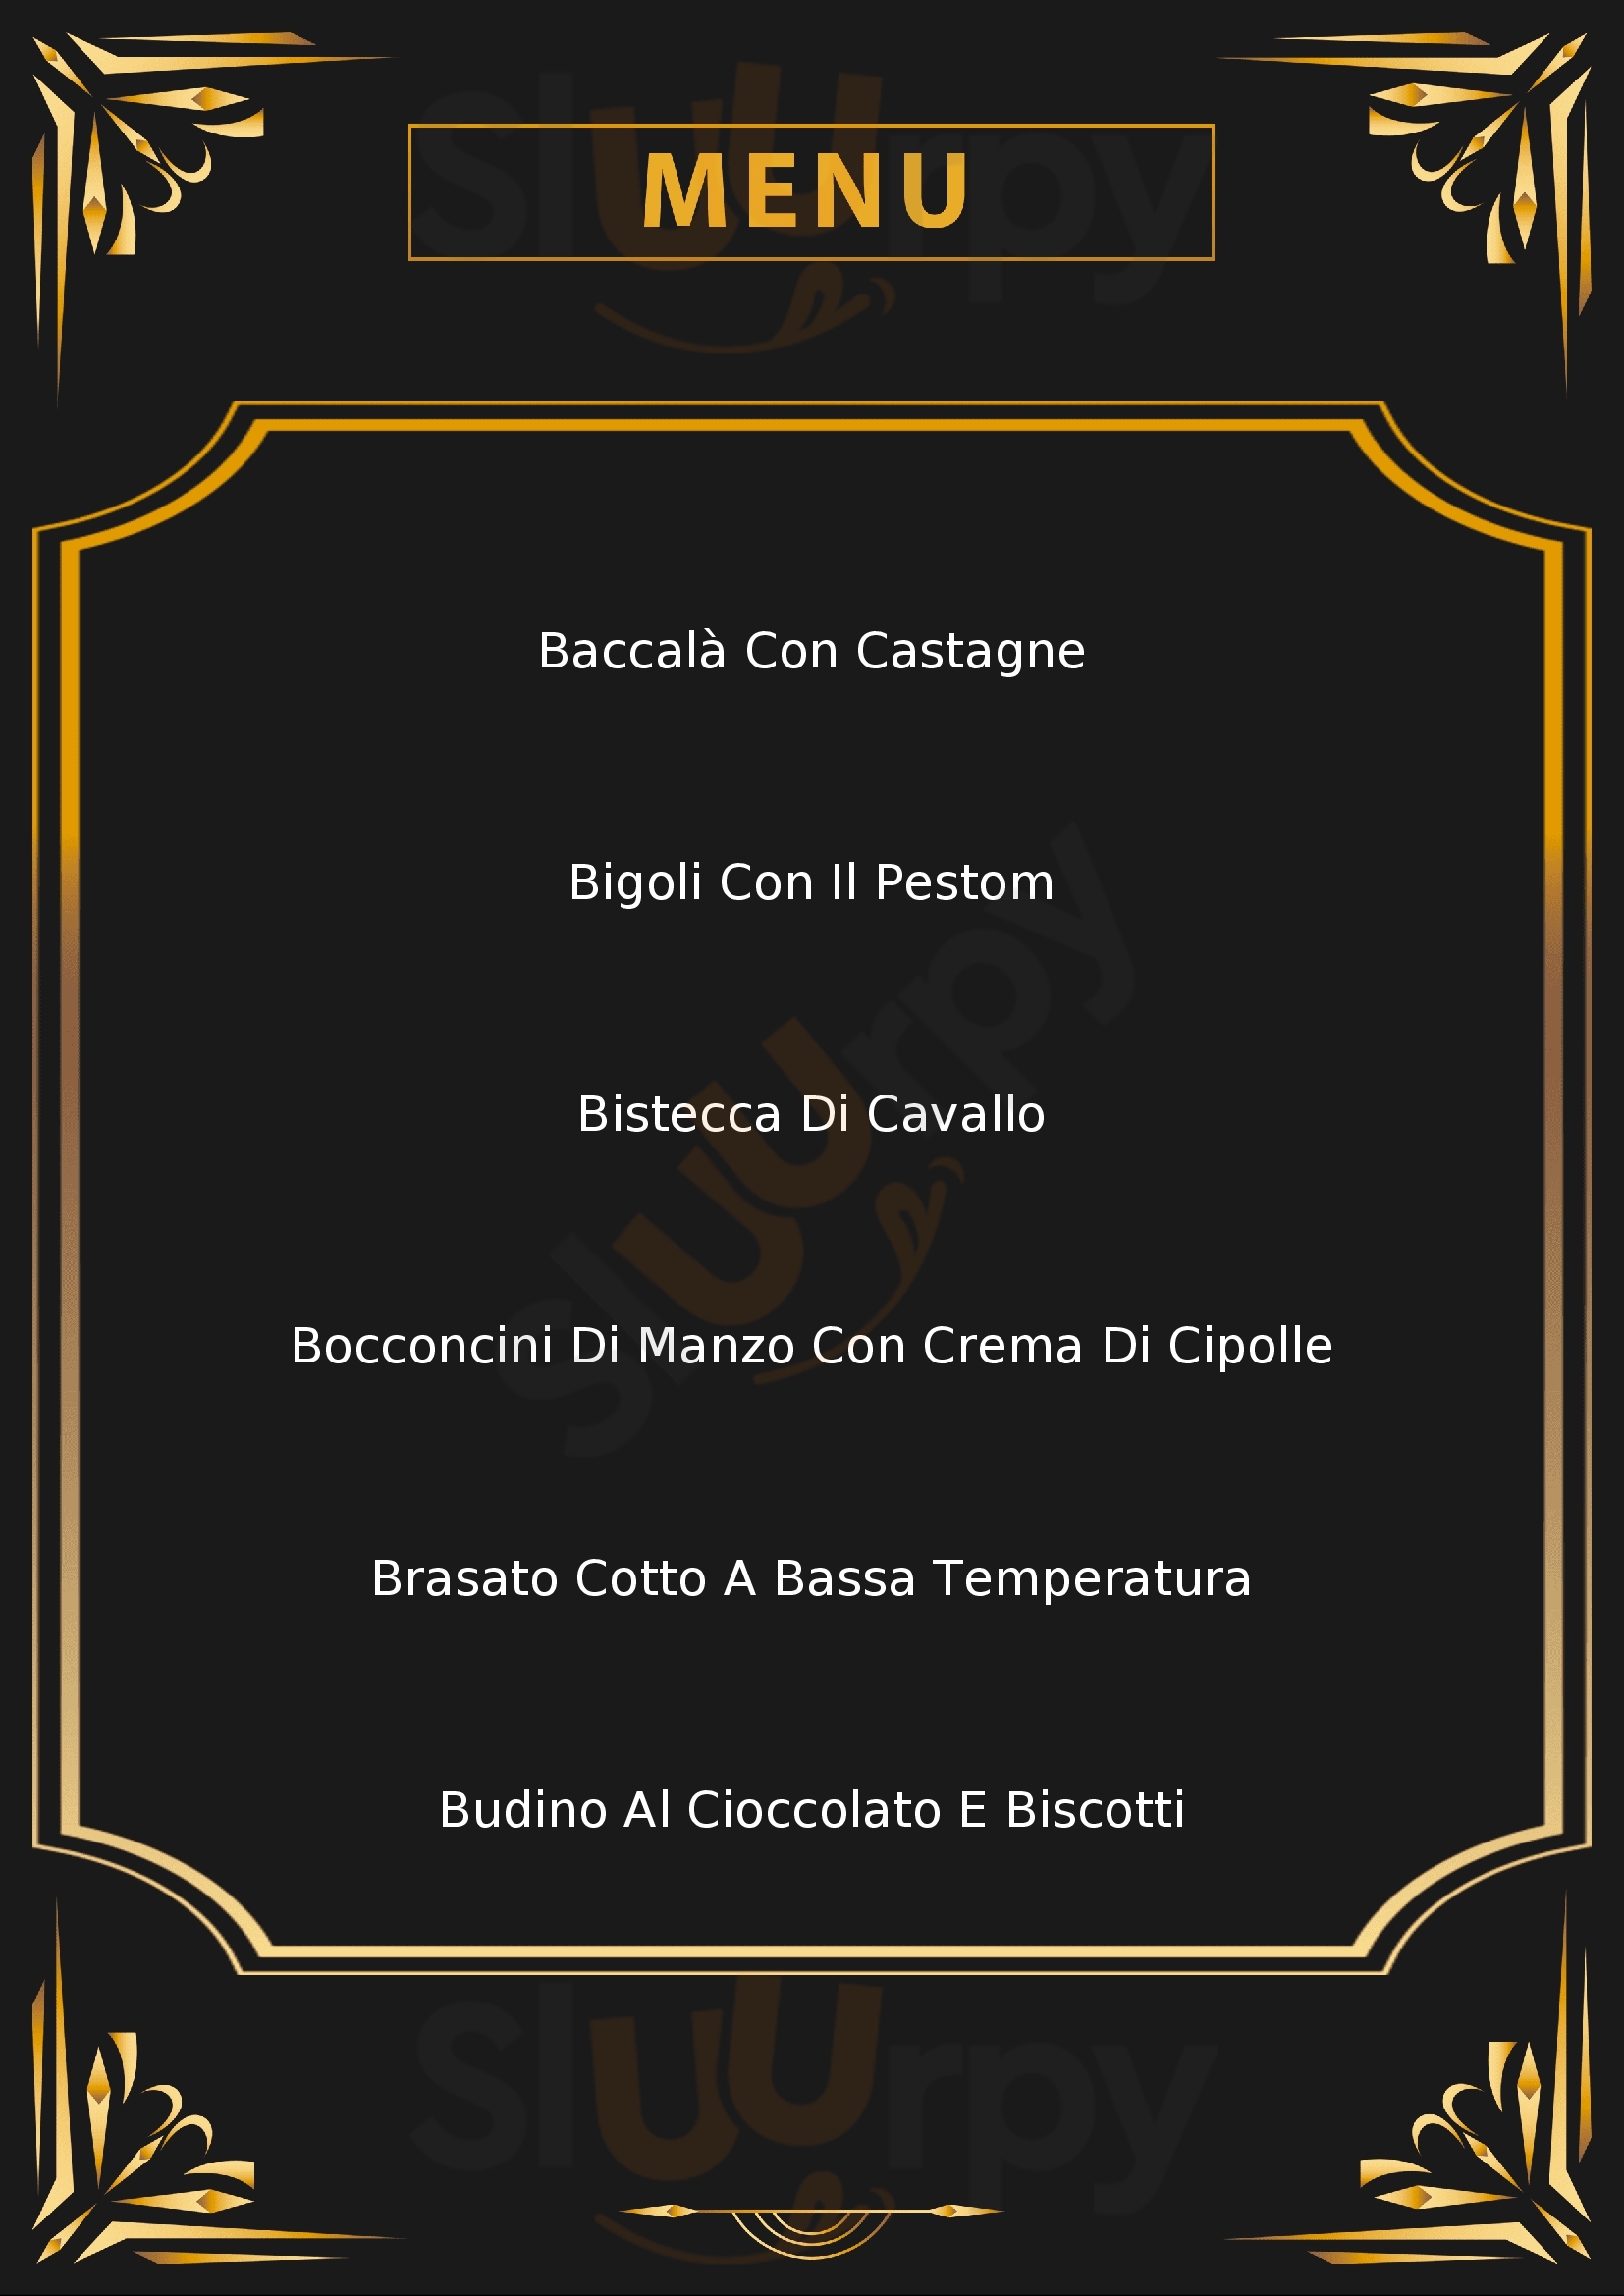 Osteria Tananai Brescia menù 1 pagina